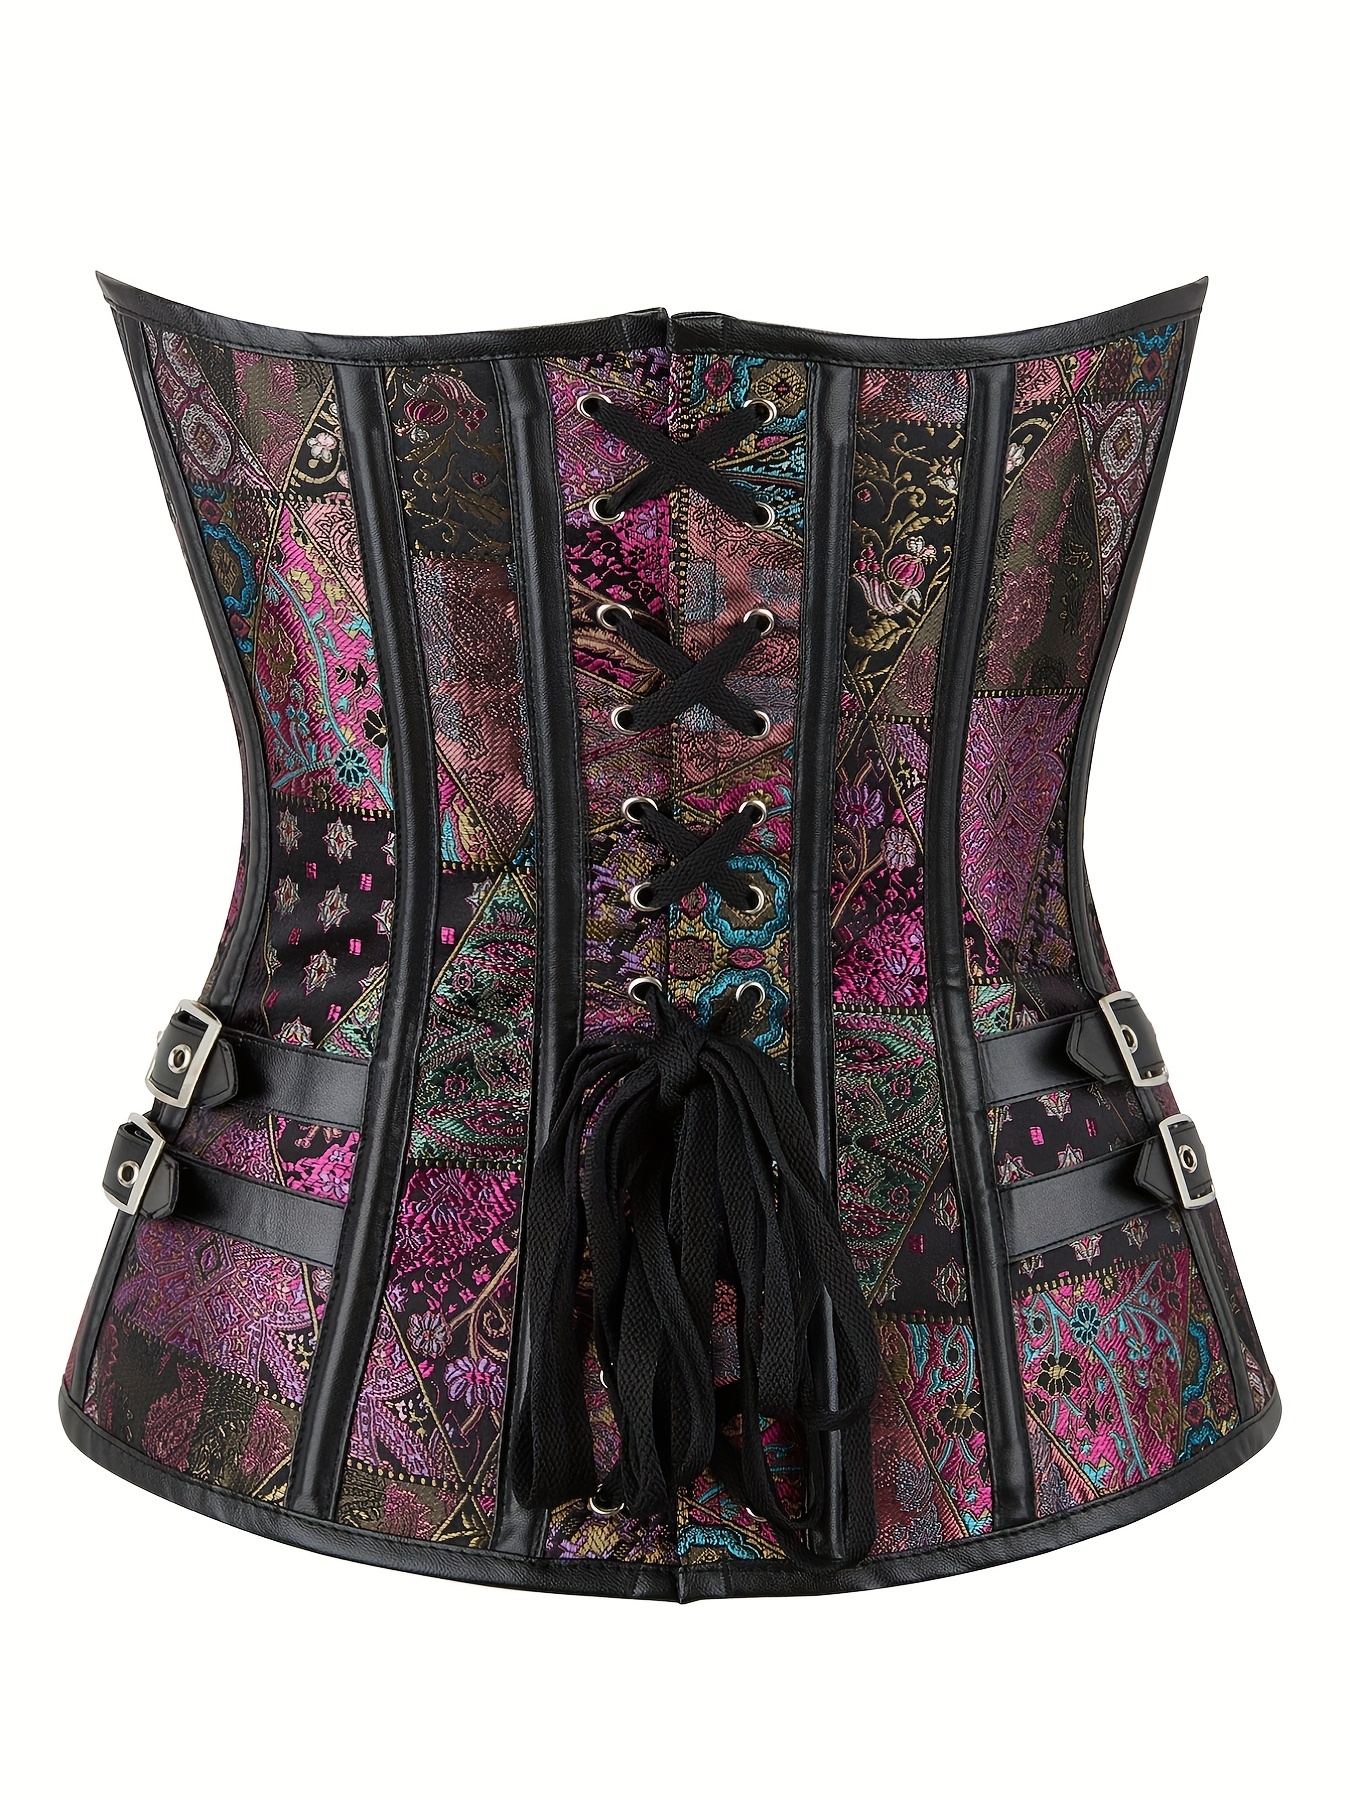 cult Vintage 80s corset top black lace pink ribbon bustier girdle